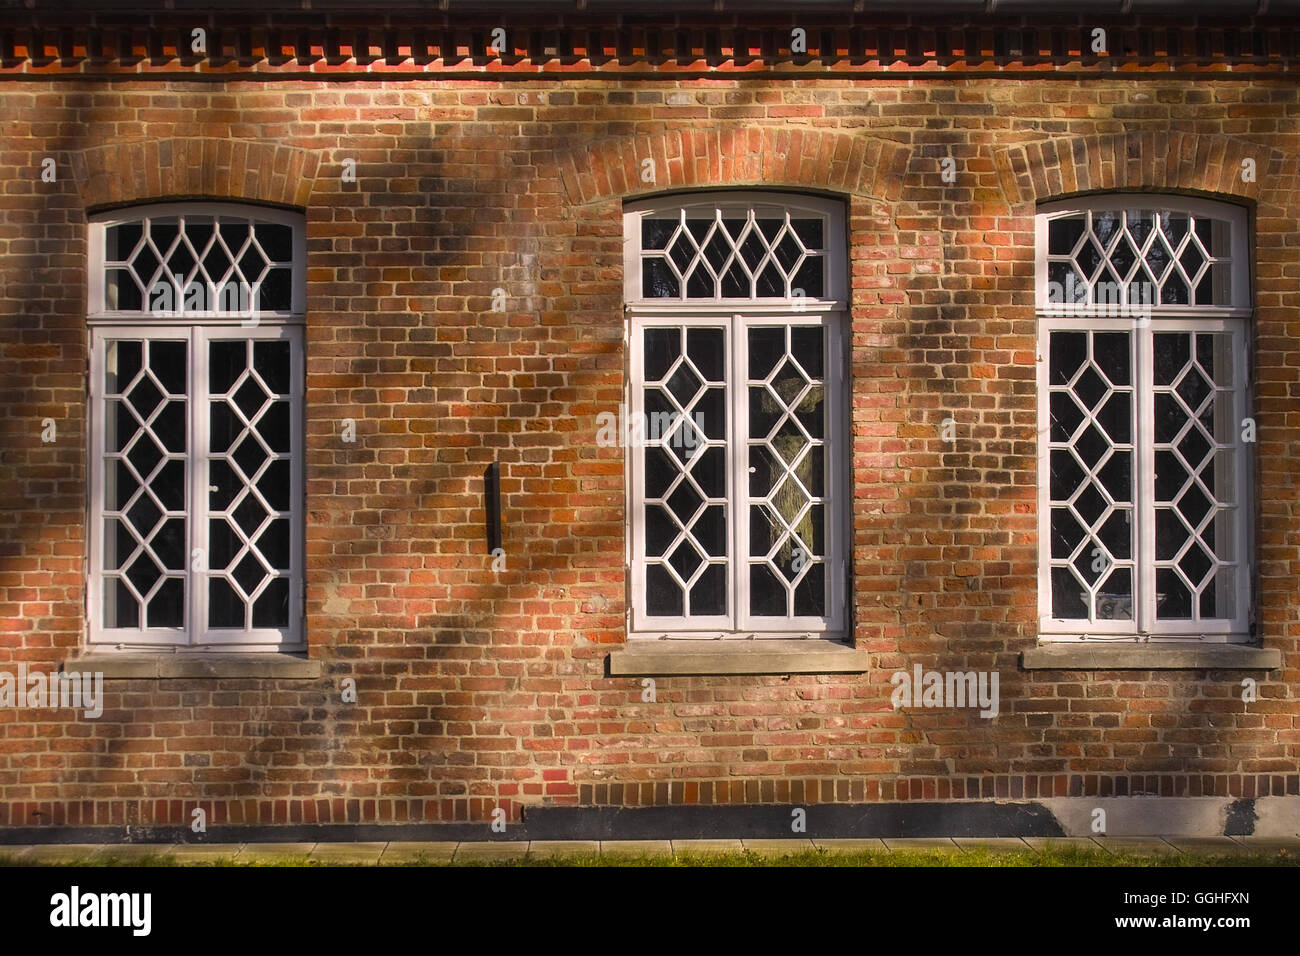 Old lattice windows, Brick House, Brick Building, brick, old house, house, old, antique, windows, Alte, Sprossenfenster, Backste Stock Photo